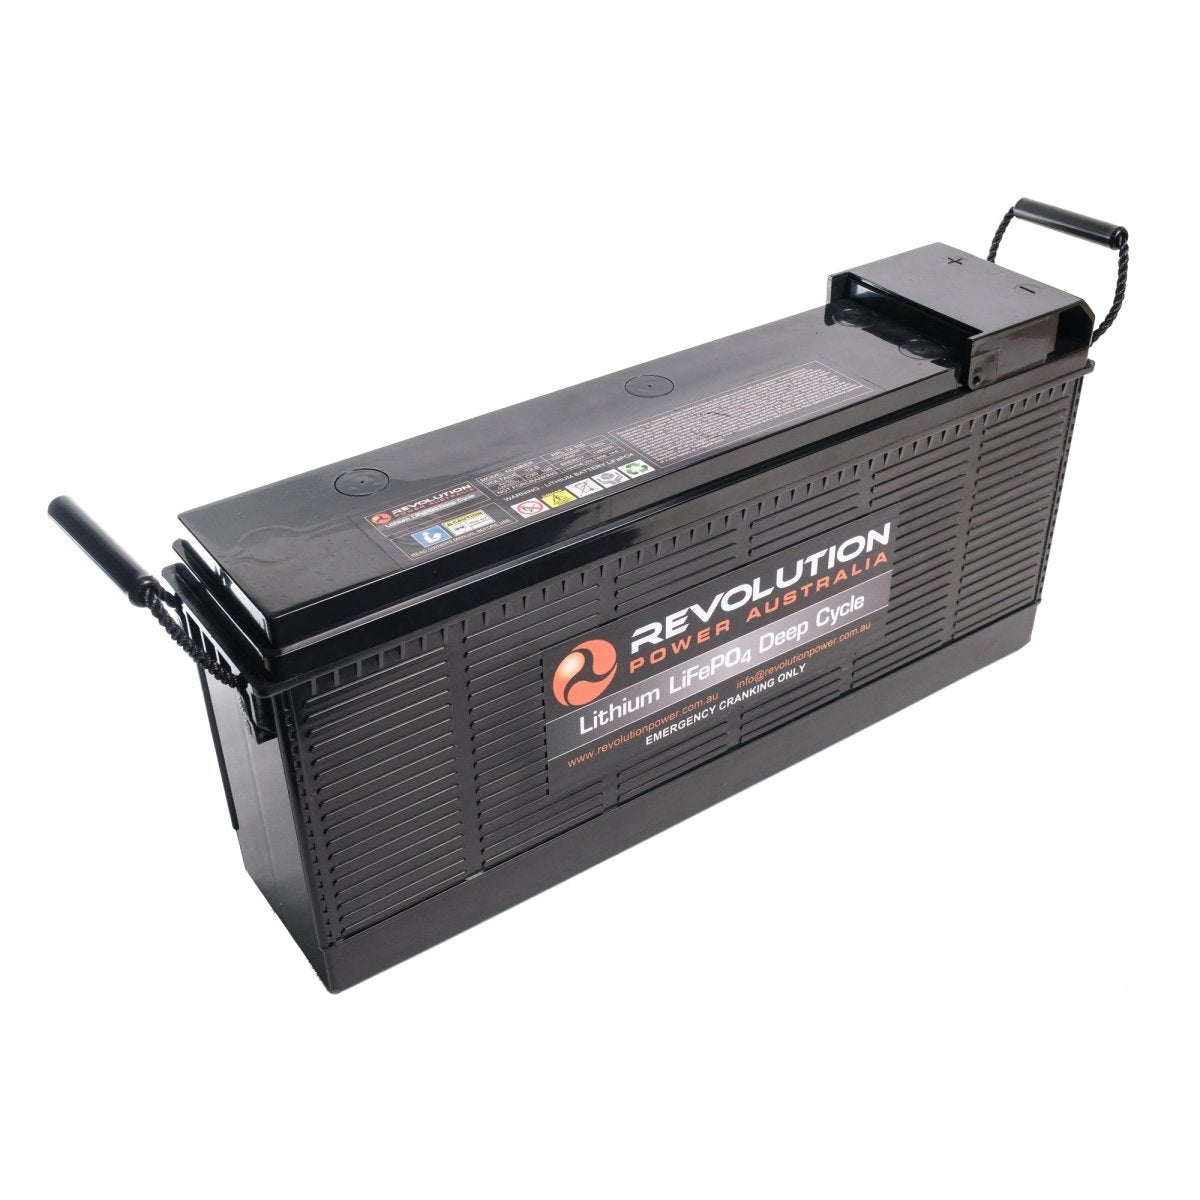 12v 100Ah Slimline High Draw Lithium Battery | Revolution Power | A247 Gear